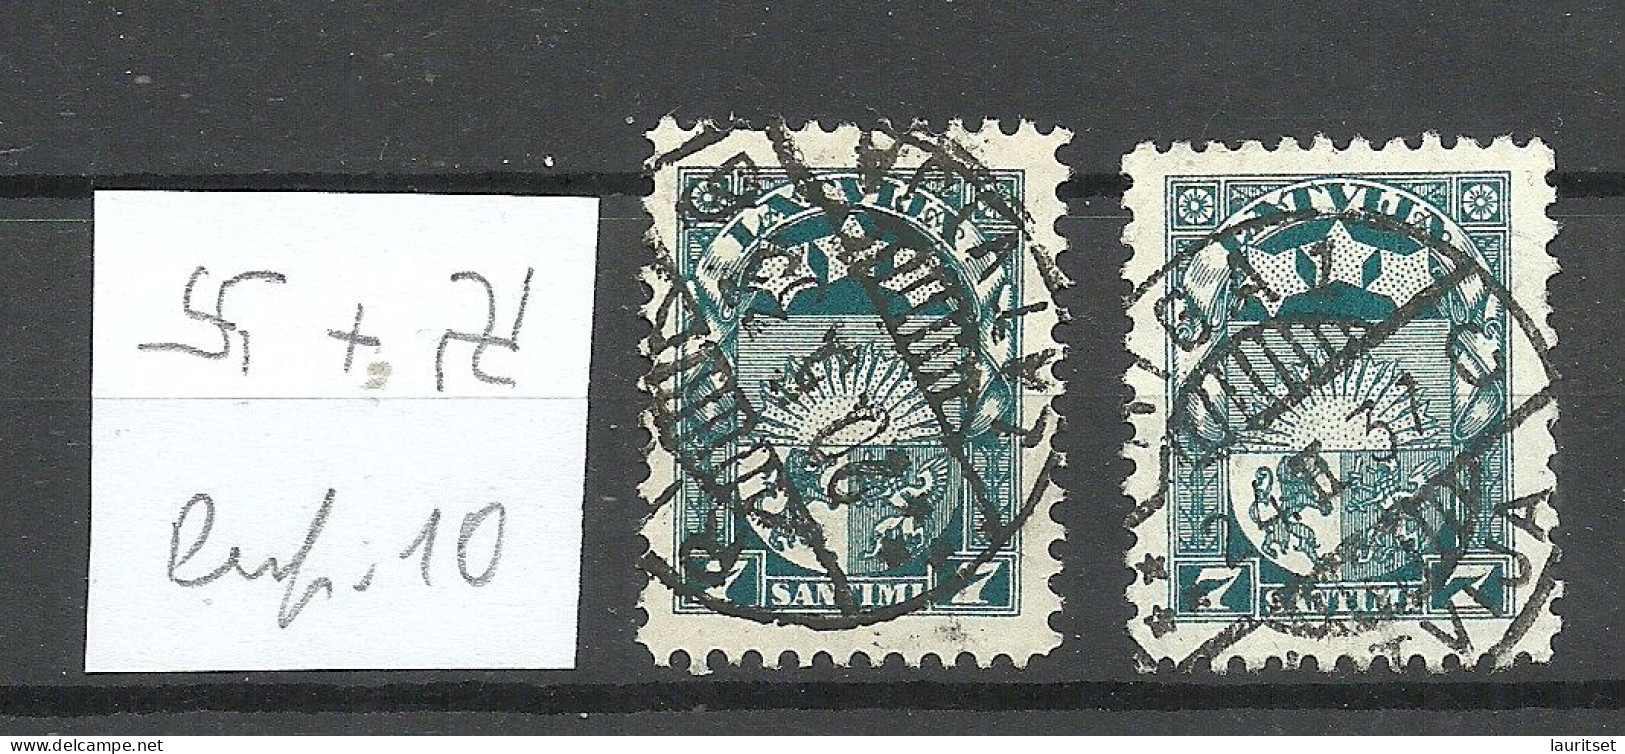 LETTLAND Latvia 1931 Michel 173 Perf 10  Normal + Inverted Watermark - Lettland